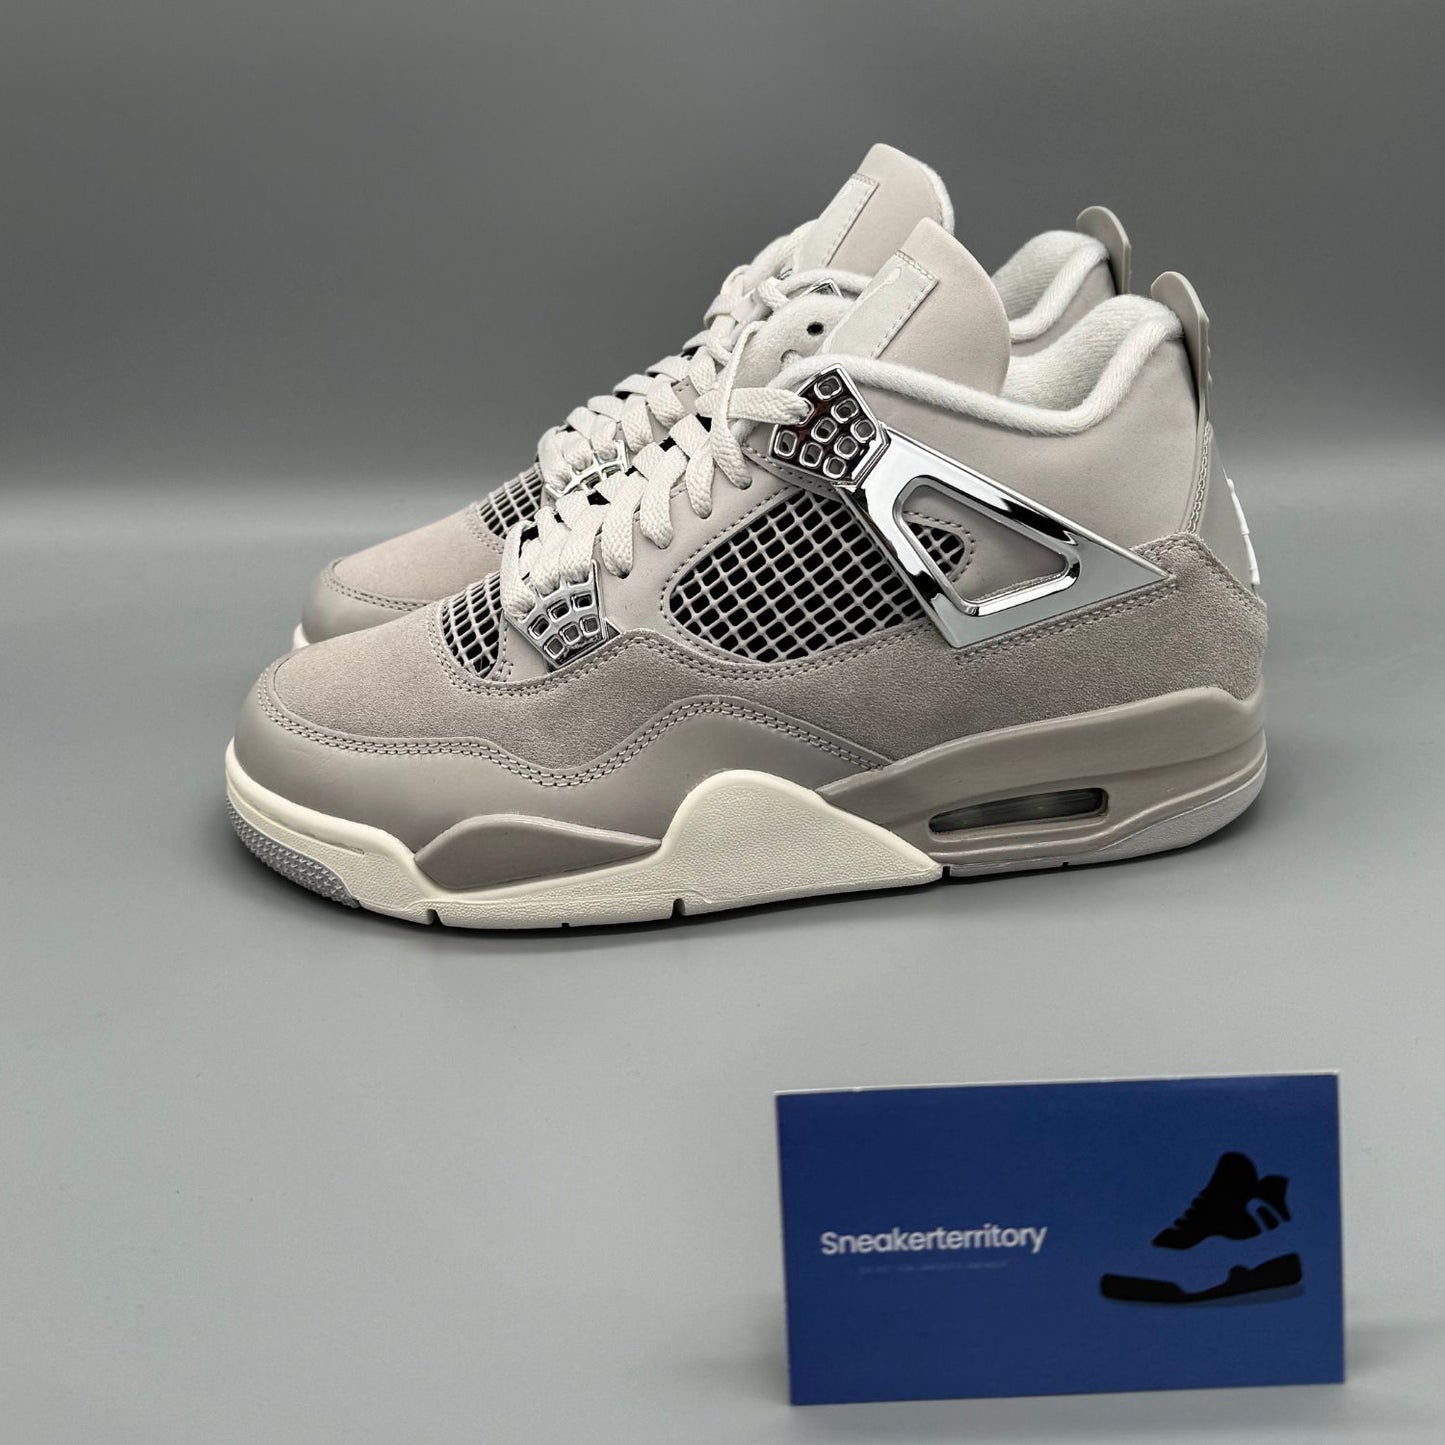 Jordan 4 Retro Frozen Moments (W) - Sneakerterritory; Sneaker Territory